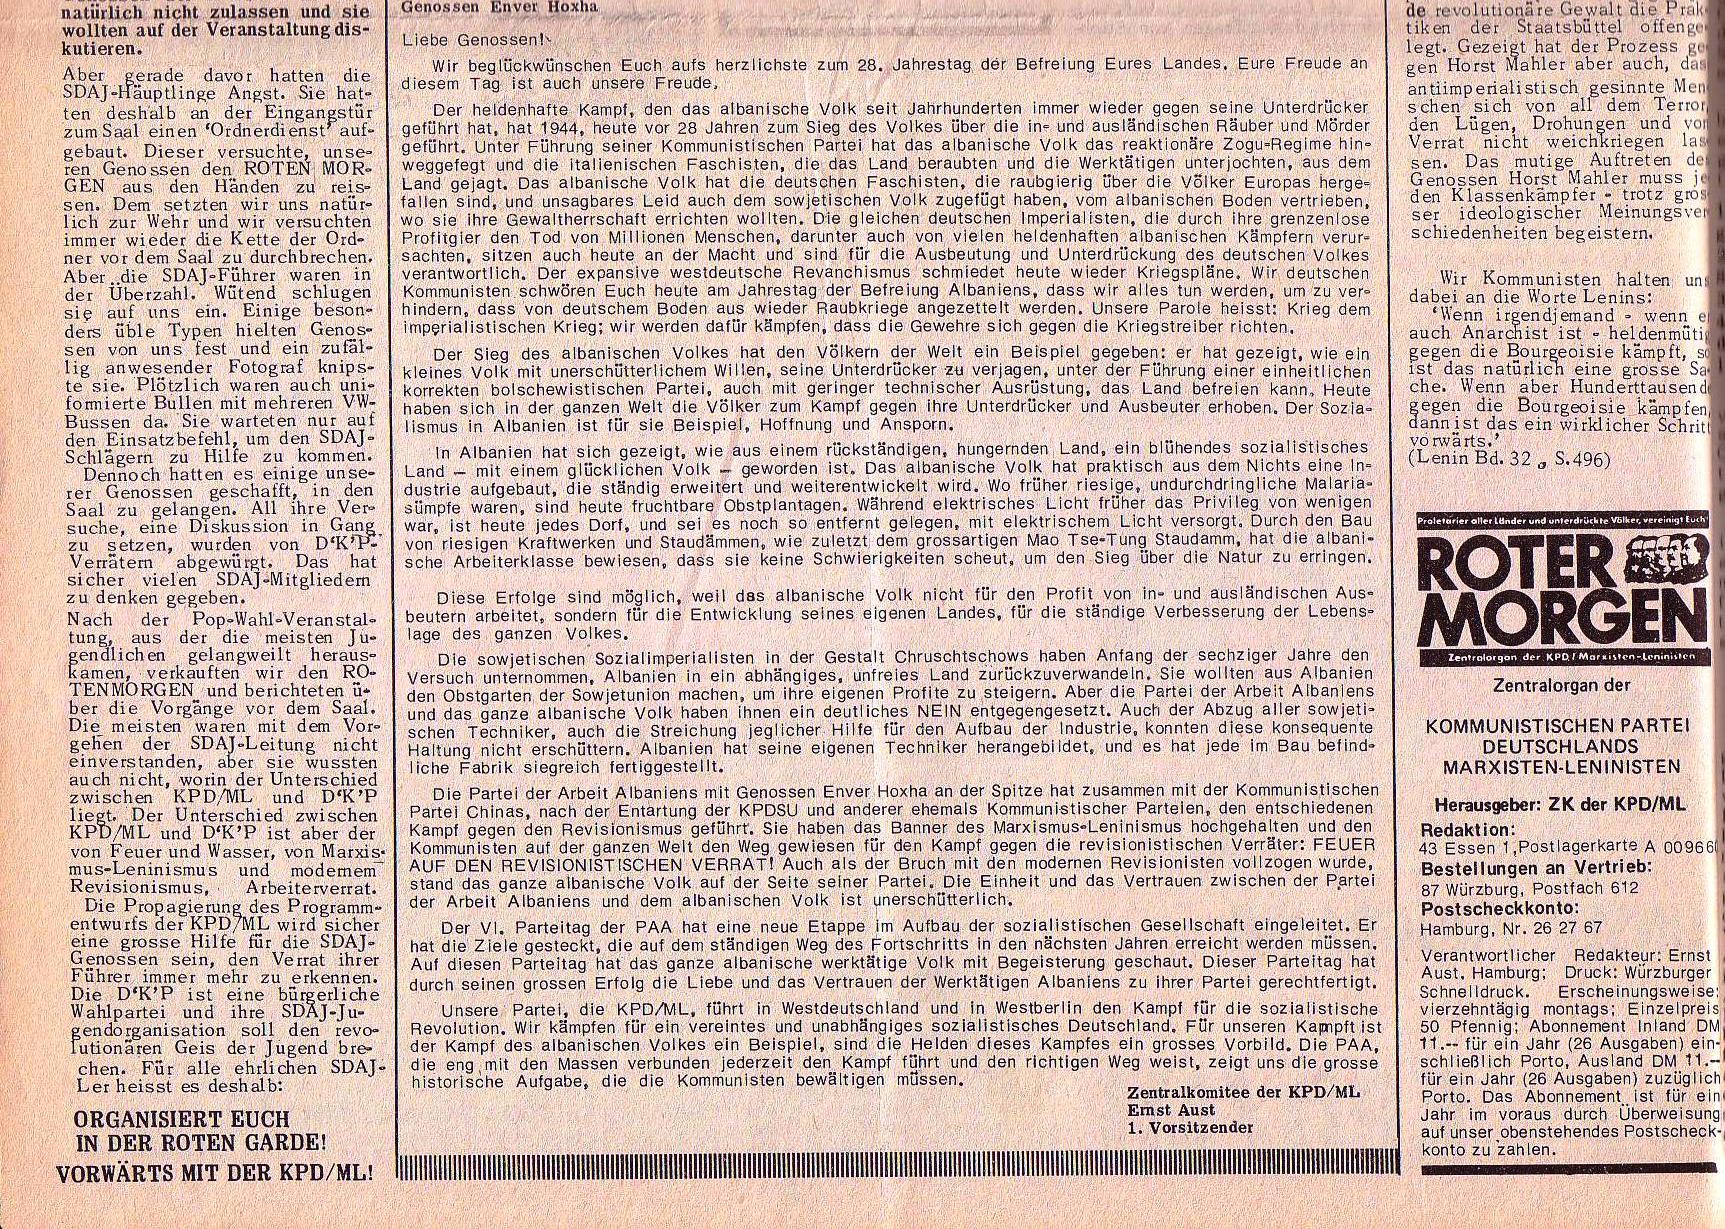 Roter Morgen, 6. Jg., 6. November 1972, Nr. 22, Seite 2b